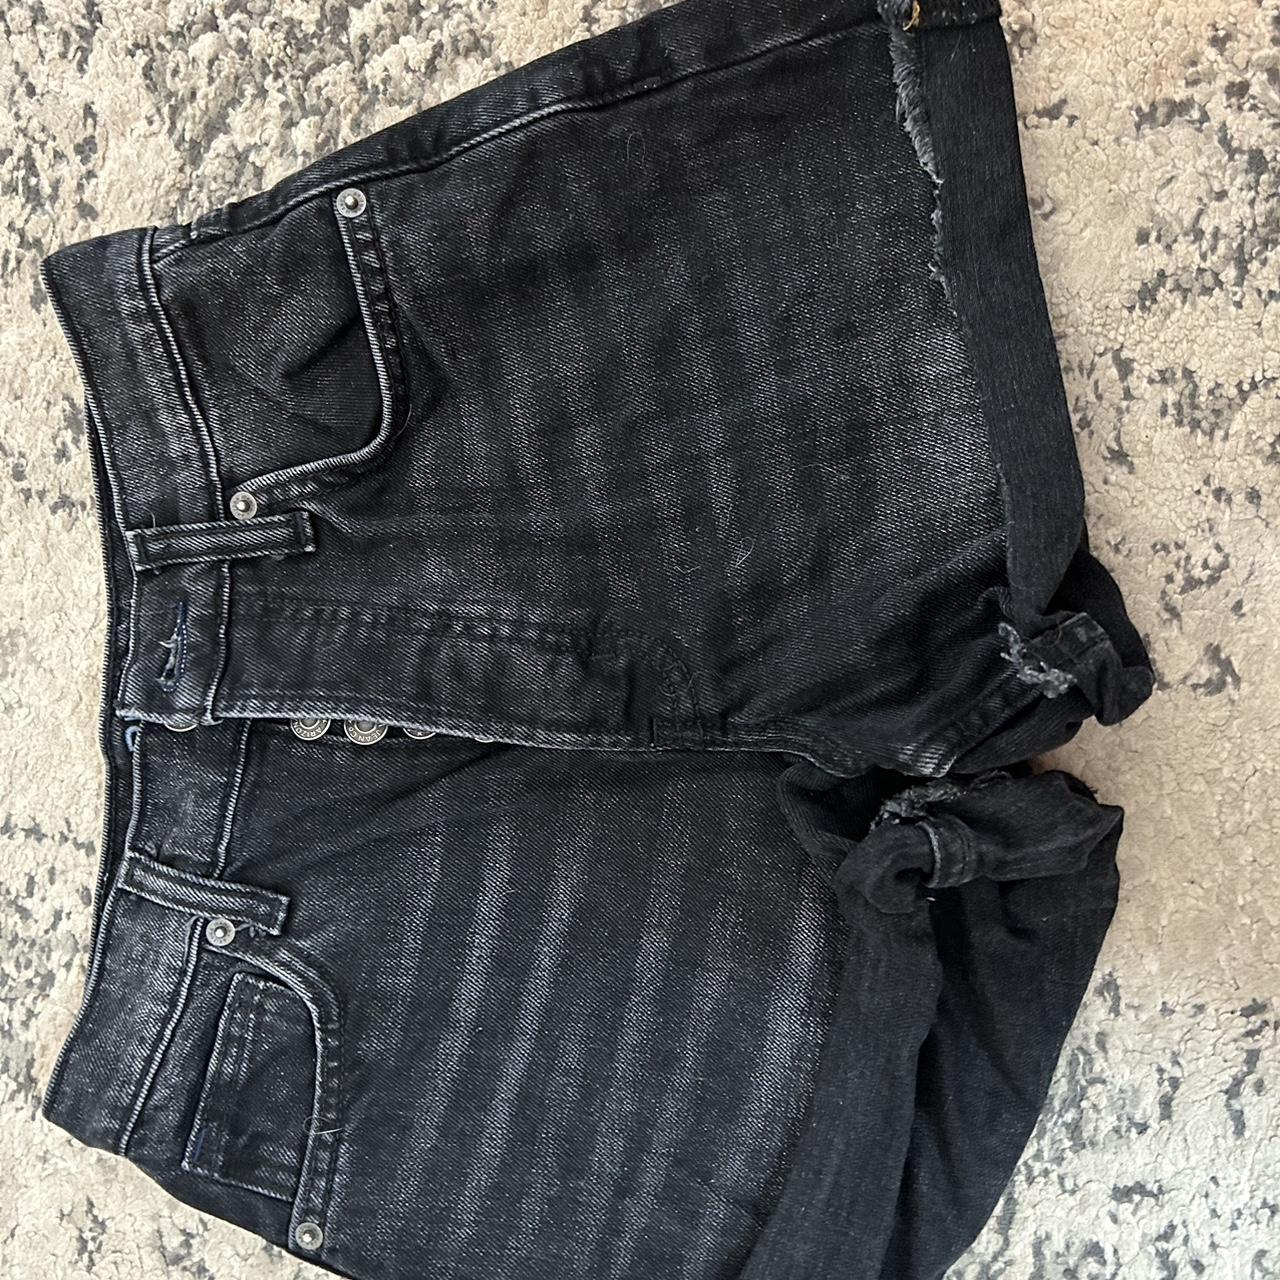 rise $10 size high Black denim - 1. OBO Depop shorts